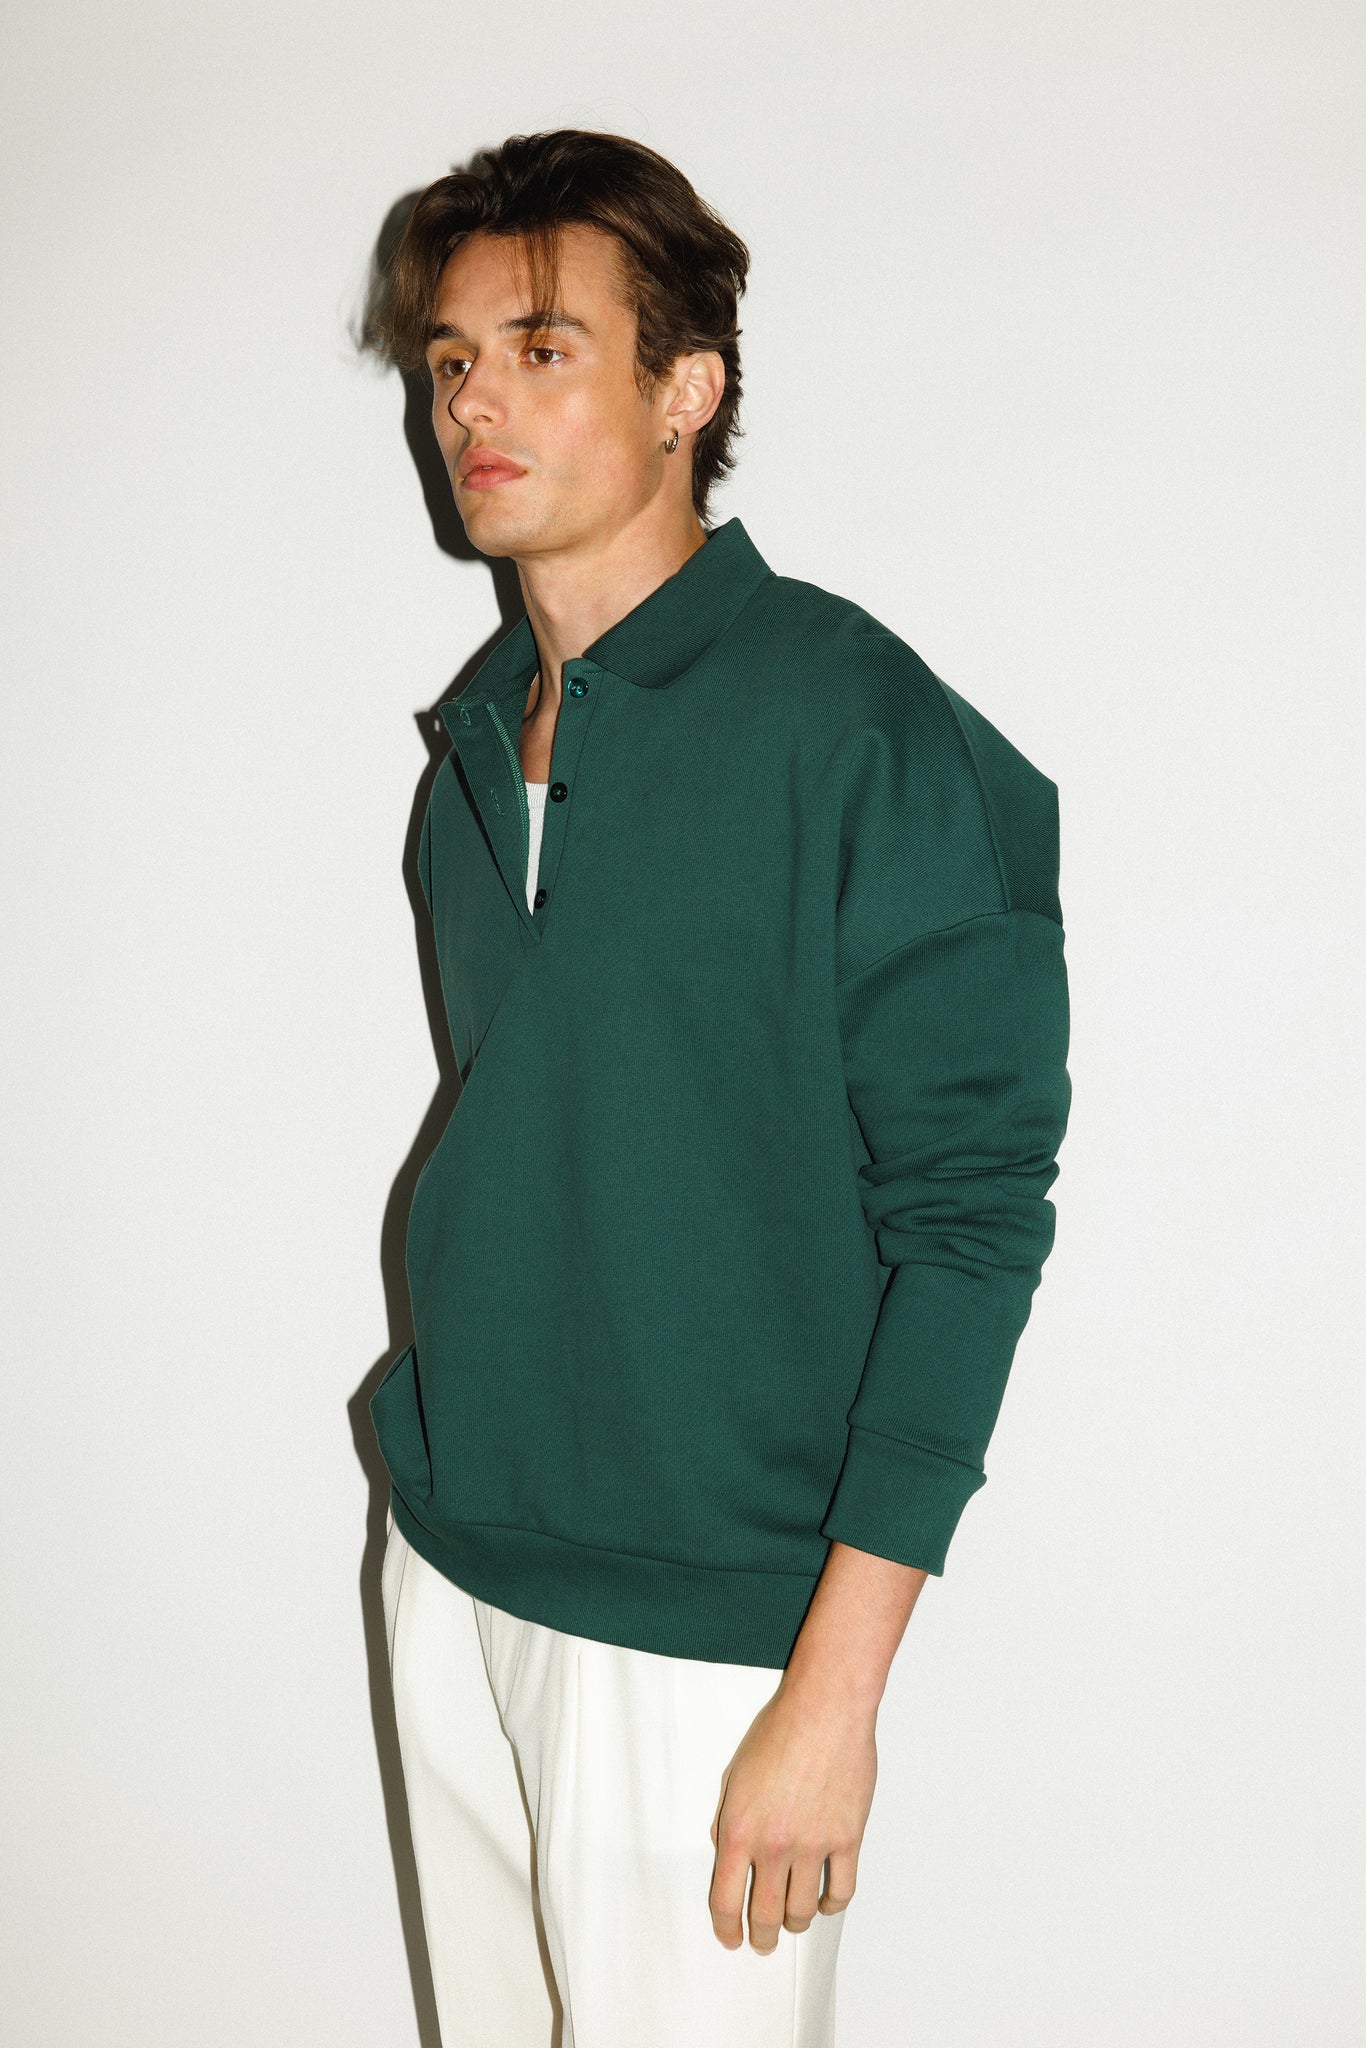 Pacific Oversized Collared Sweatshirt  |  Evergreen